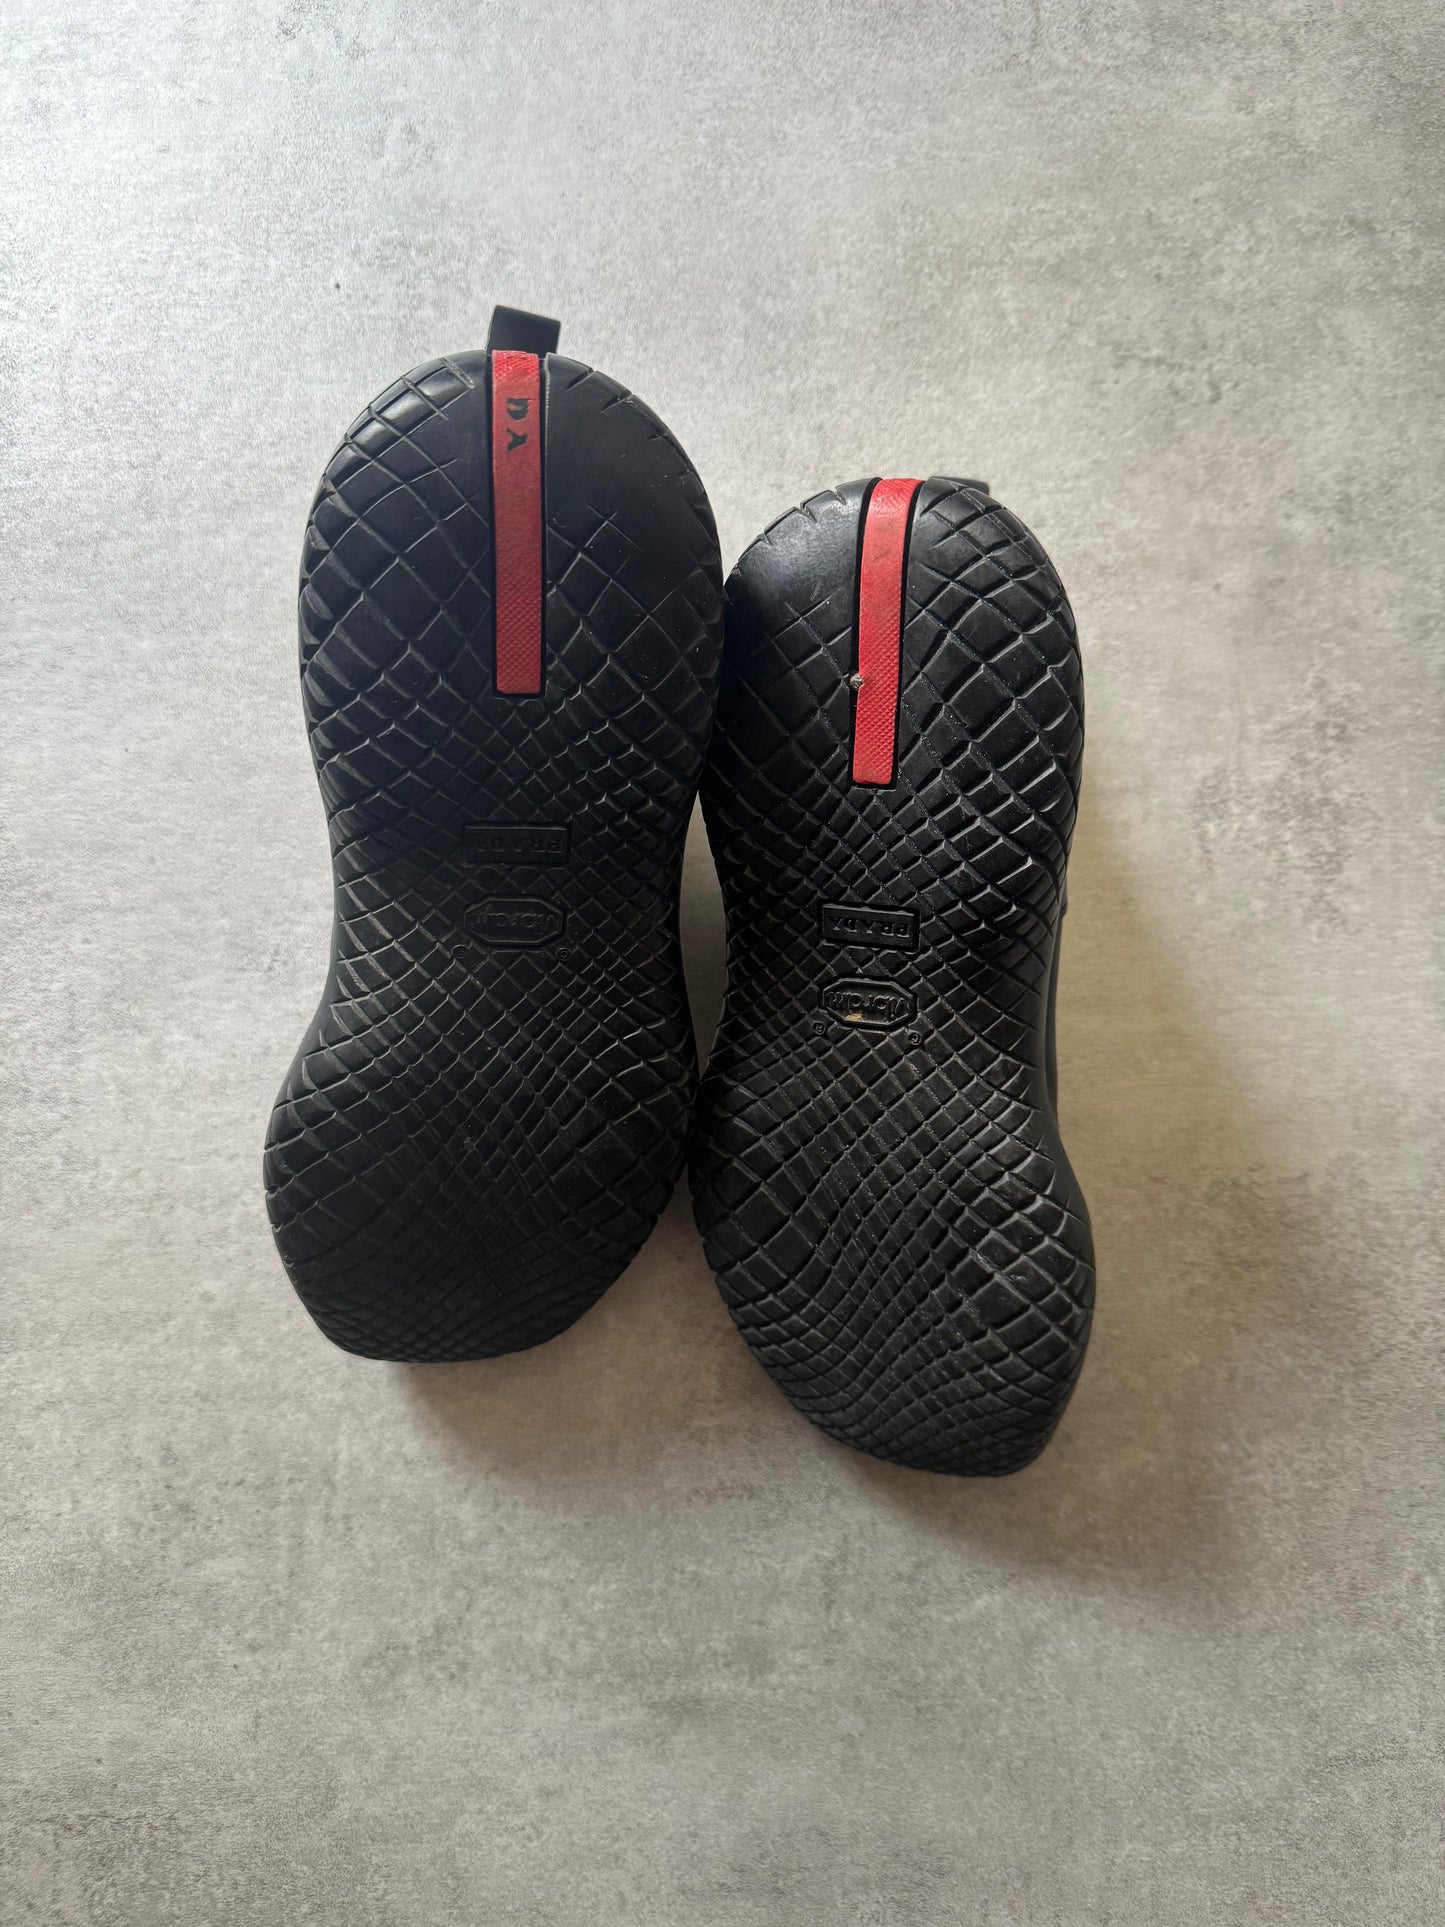 FW1999 Prada Ankle Black Leather Boots  (42,5) - 9